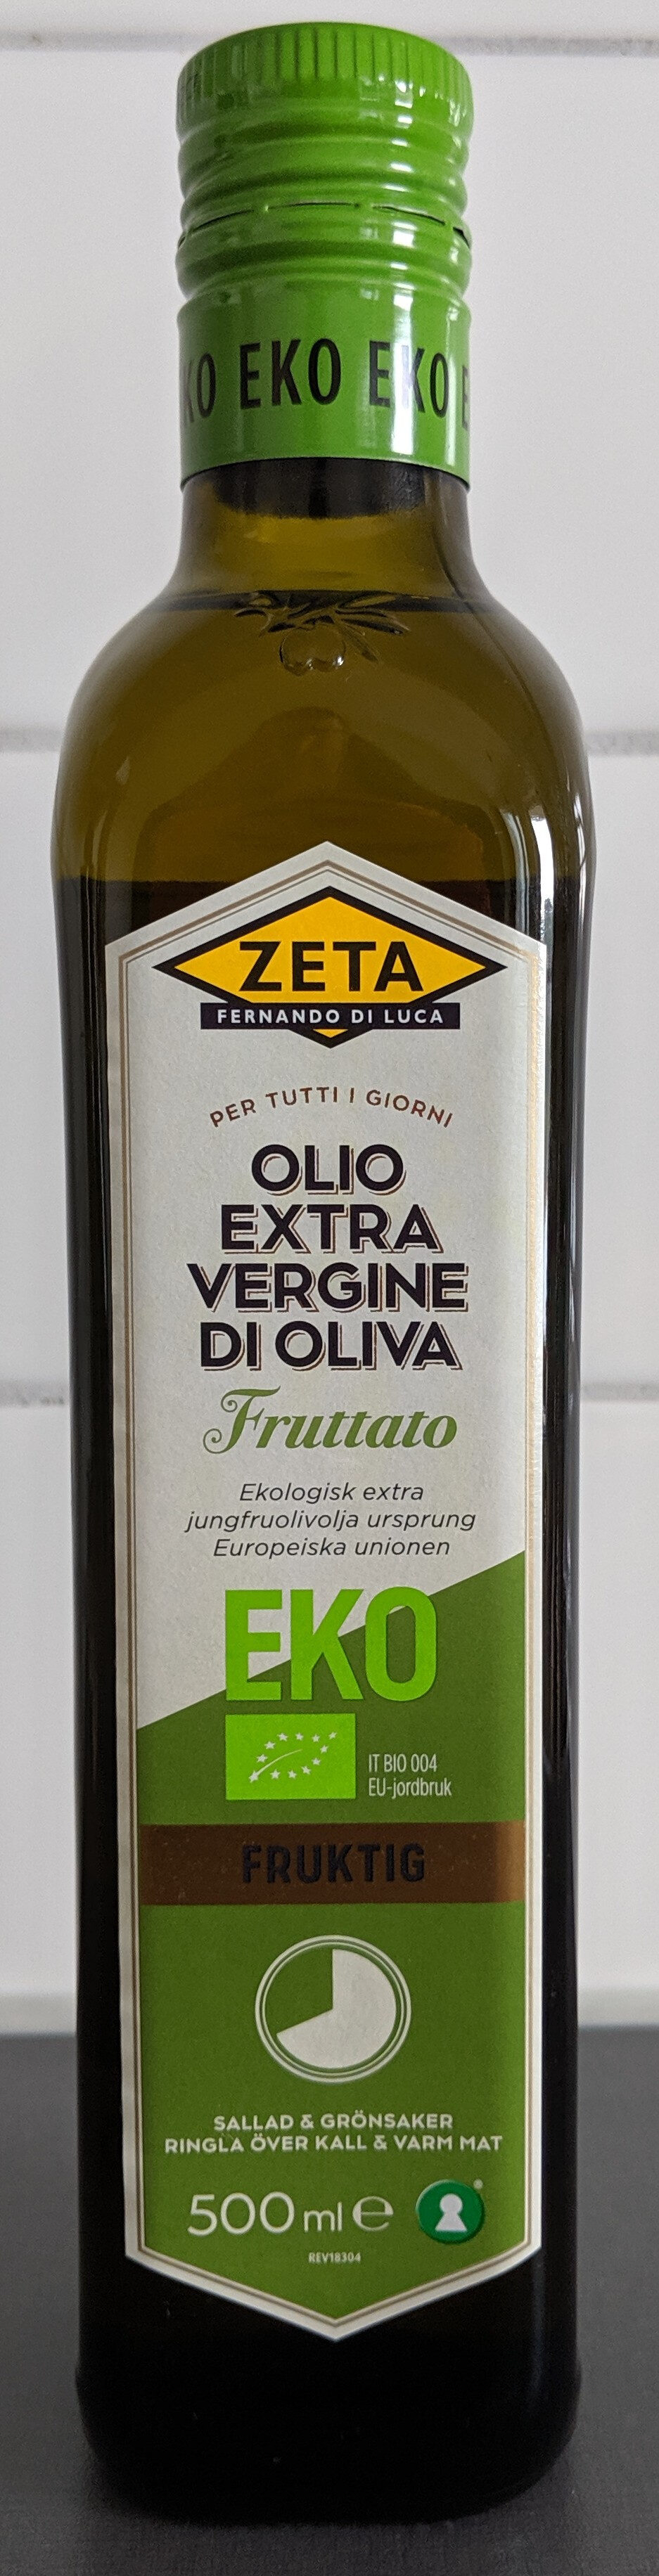 Olio Extra Vergine Do Oliva - Produkt